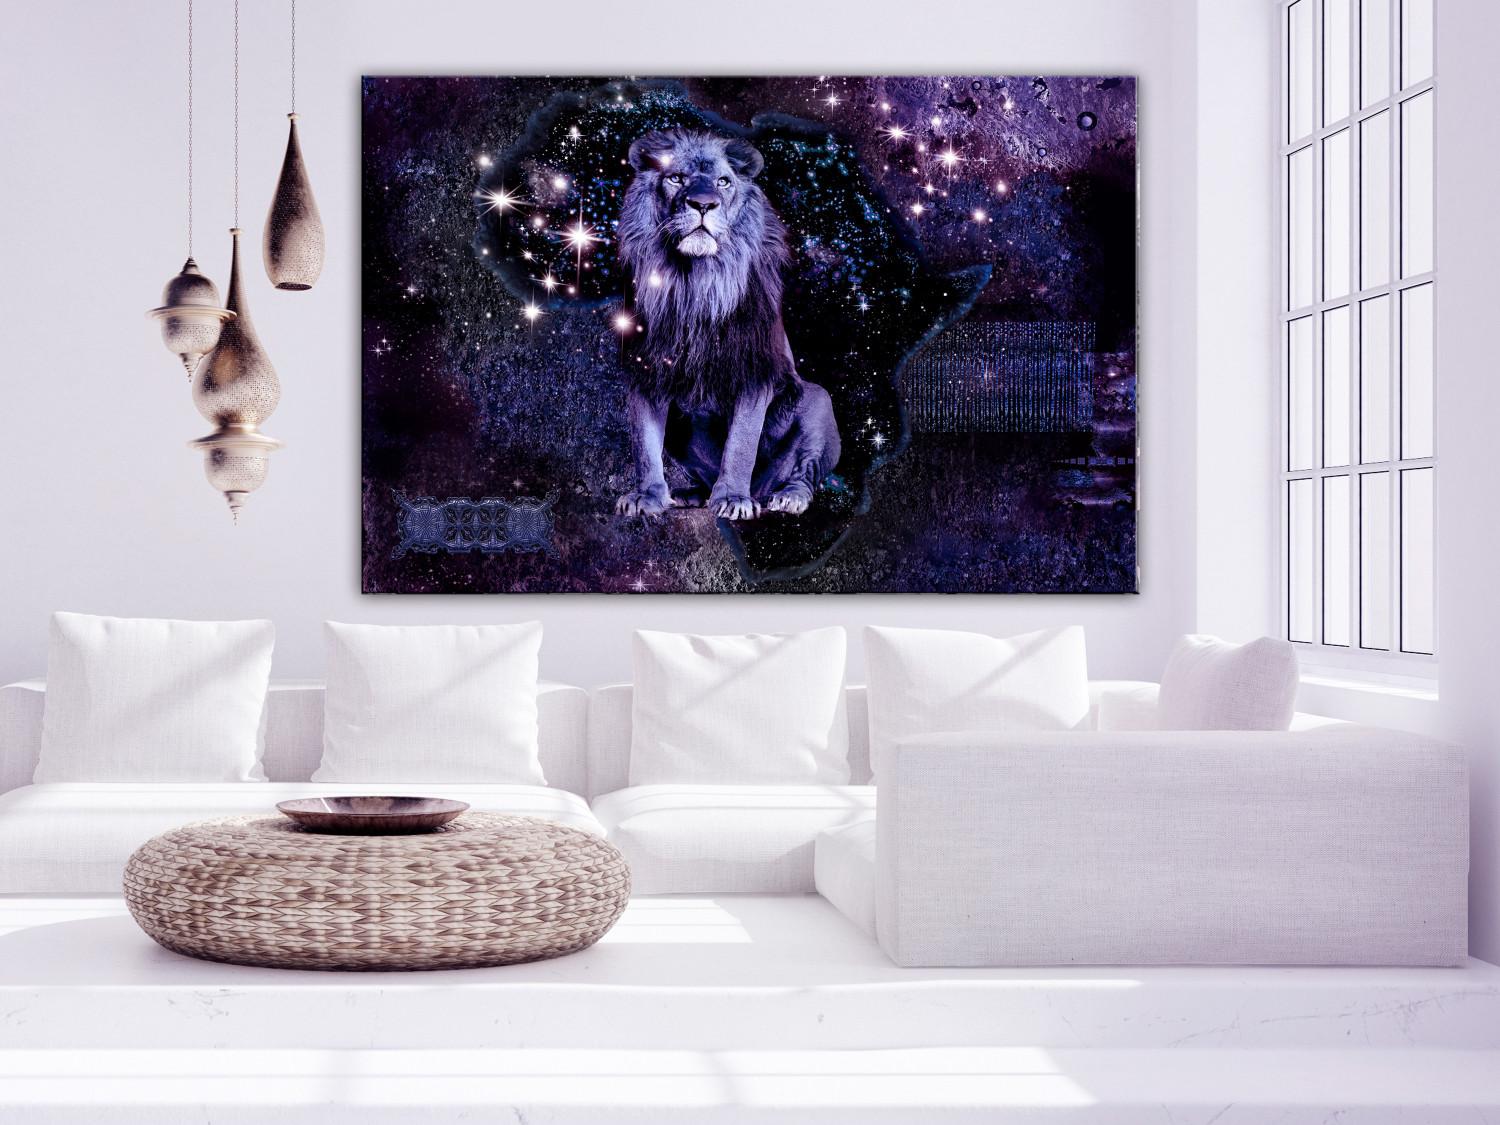 Canvas King's Rest (1-piece) wide - wild cat on purple background